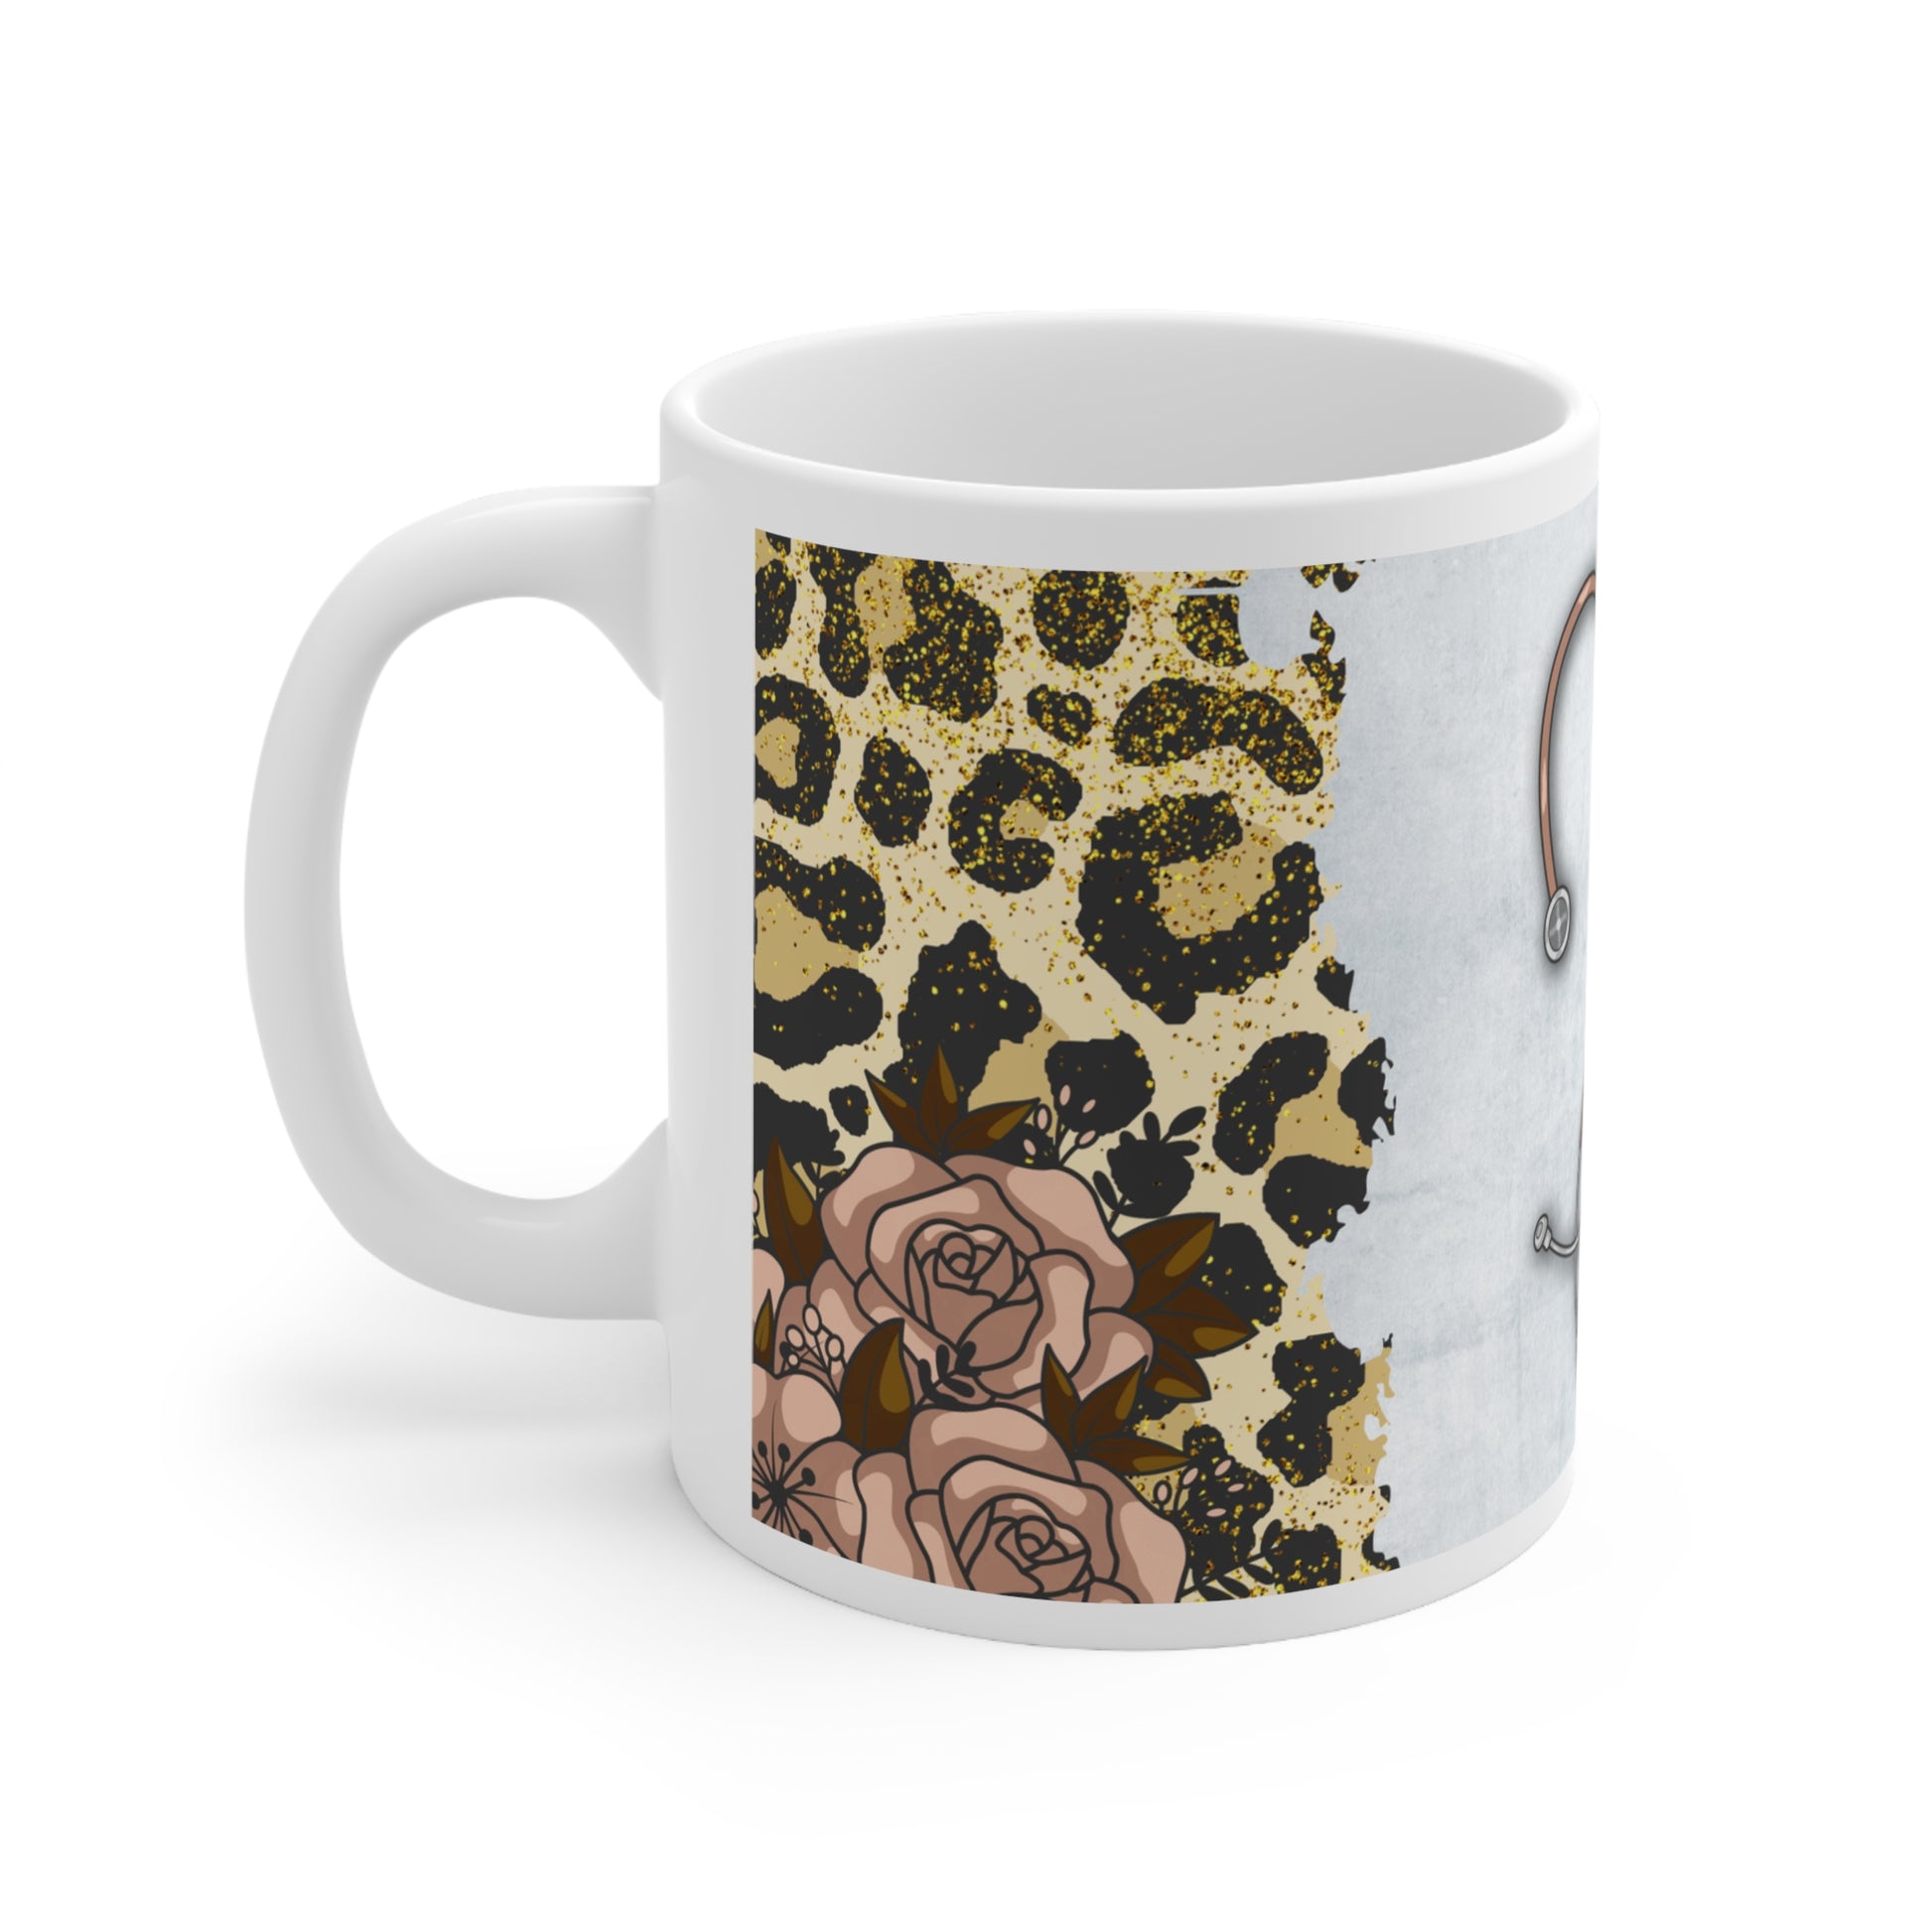 Cheetah Stethoscope Ceramic Mug 11oz - Three Bears Boutique